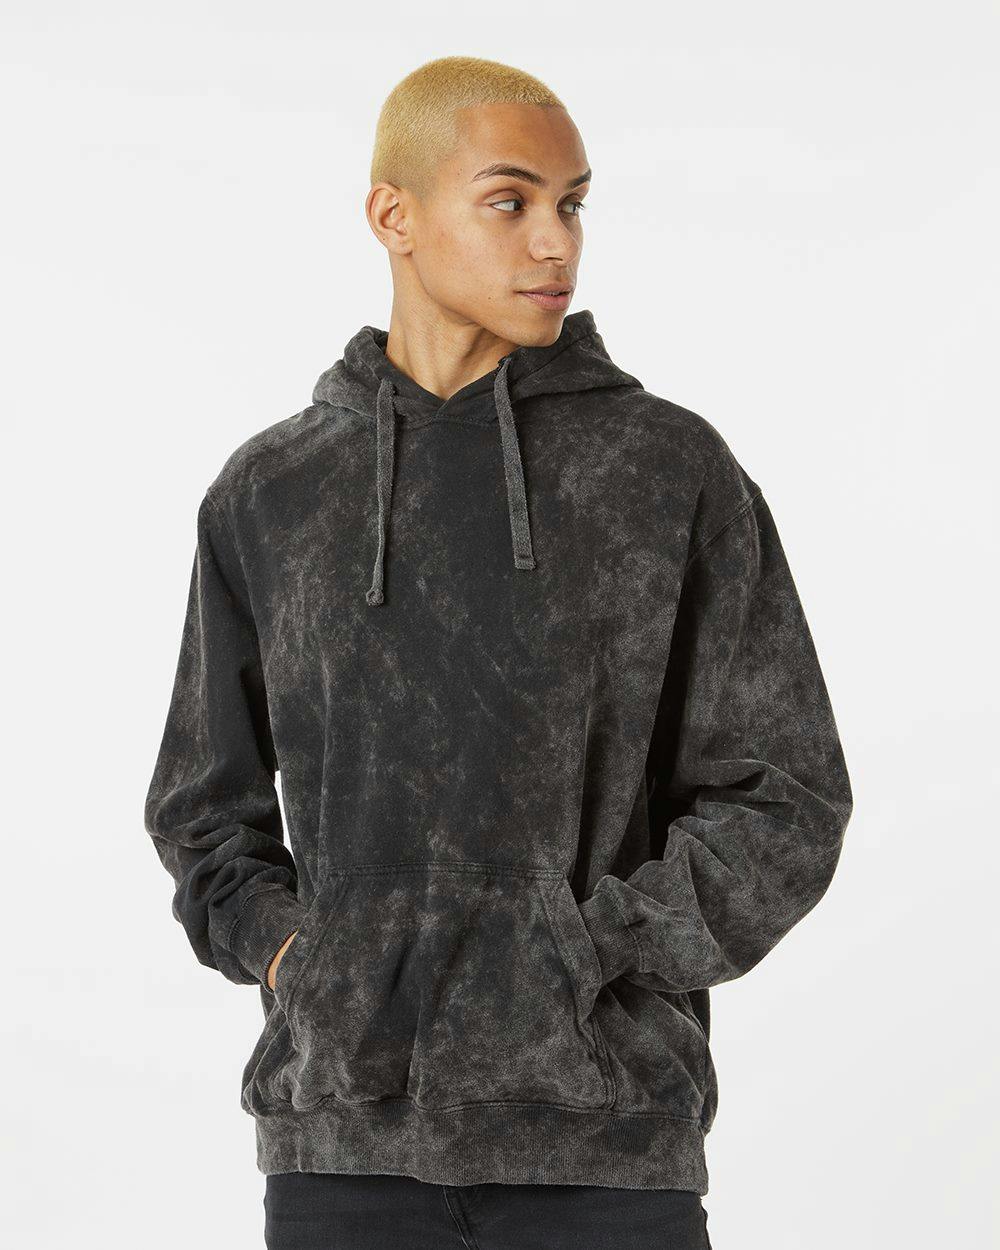 Image for Premium Fleece Mineral Wash Hooded Sweatshirt - 854MW